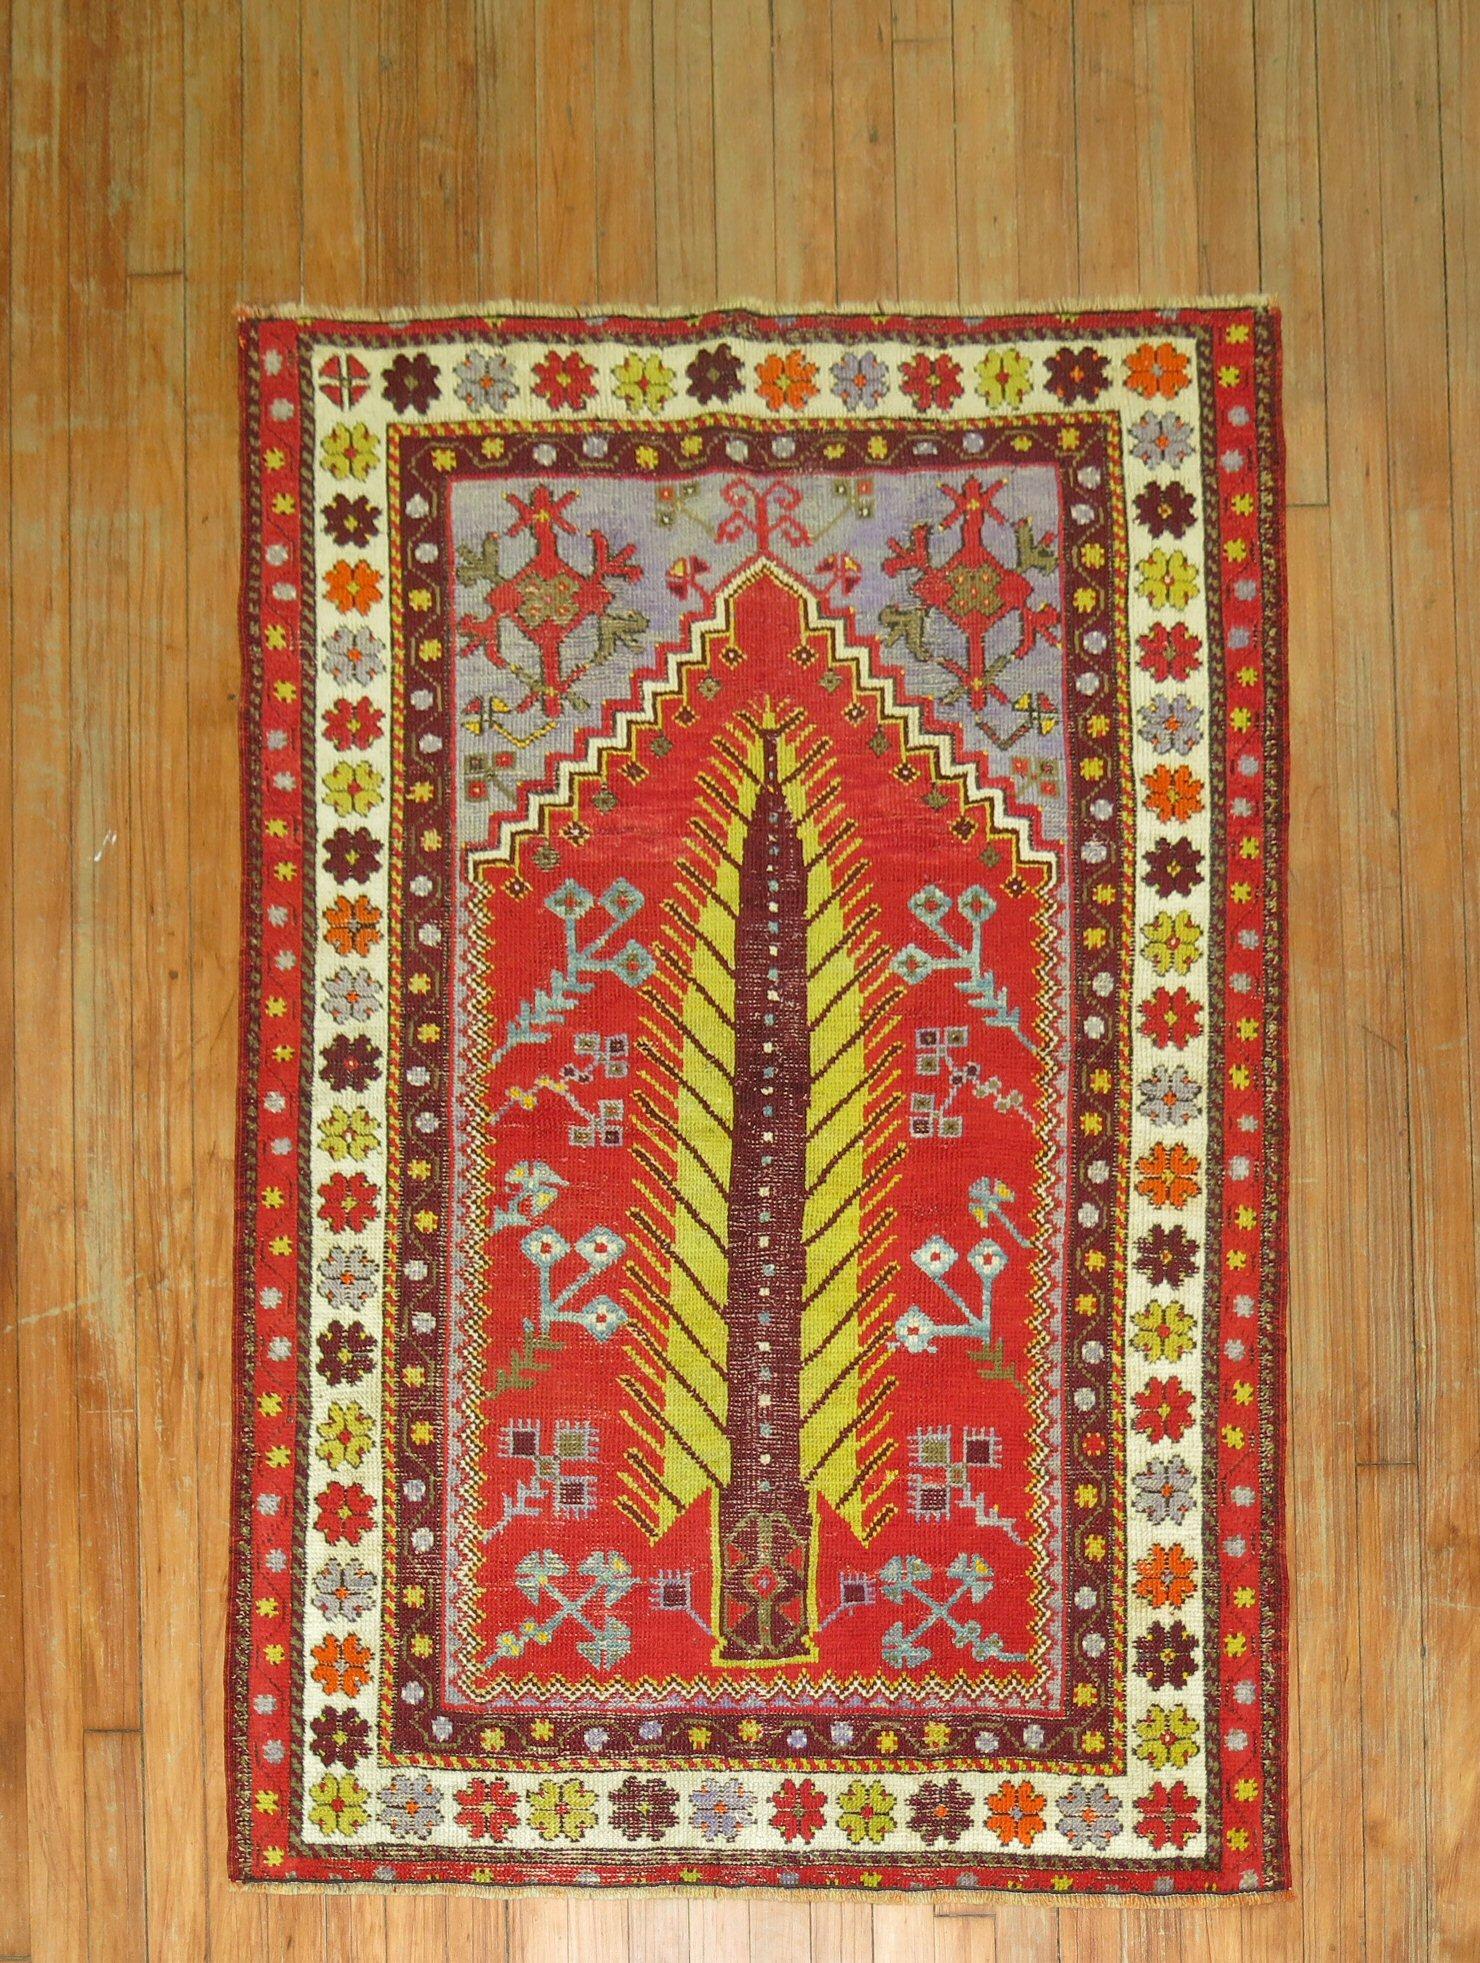 Mid-20th century Turkish Anatolian Prayer Style Rug

rug no.	30997
size	3'3